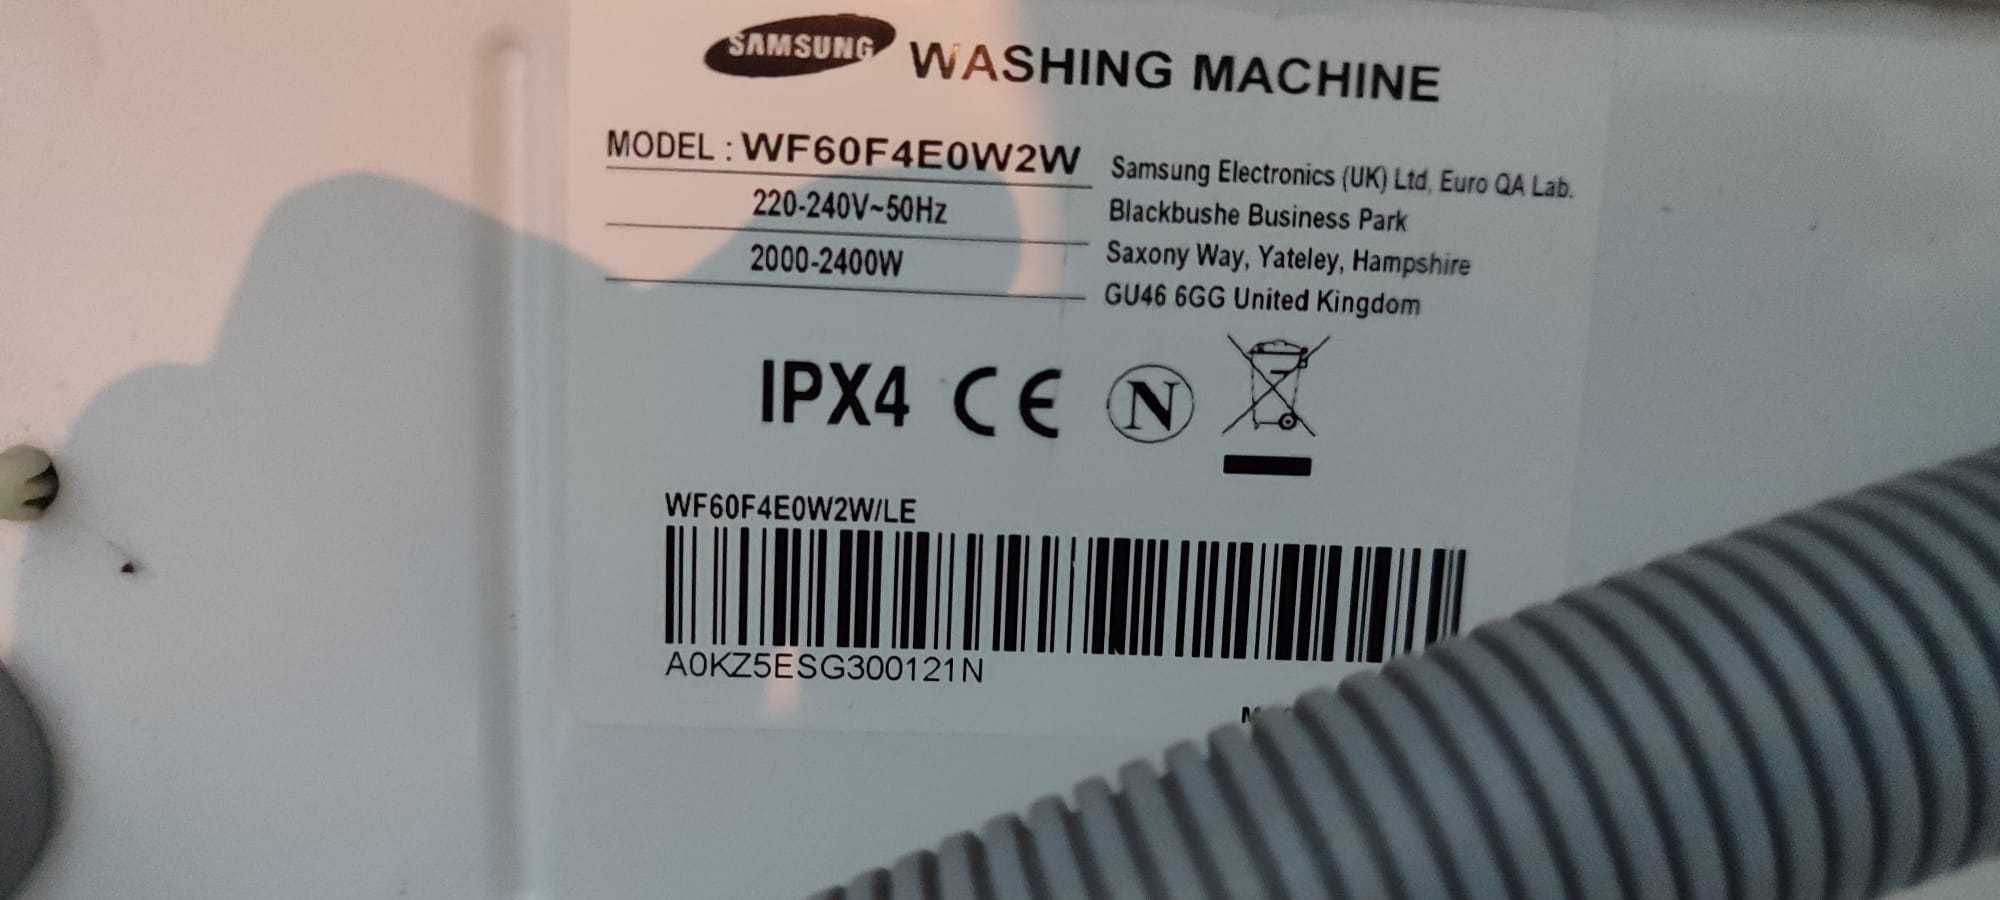 vand masina de spalat rufe Samsung eco bubble 6.0 kg-piese schimb